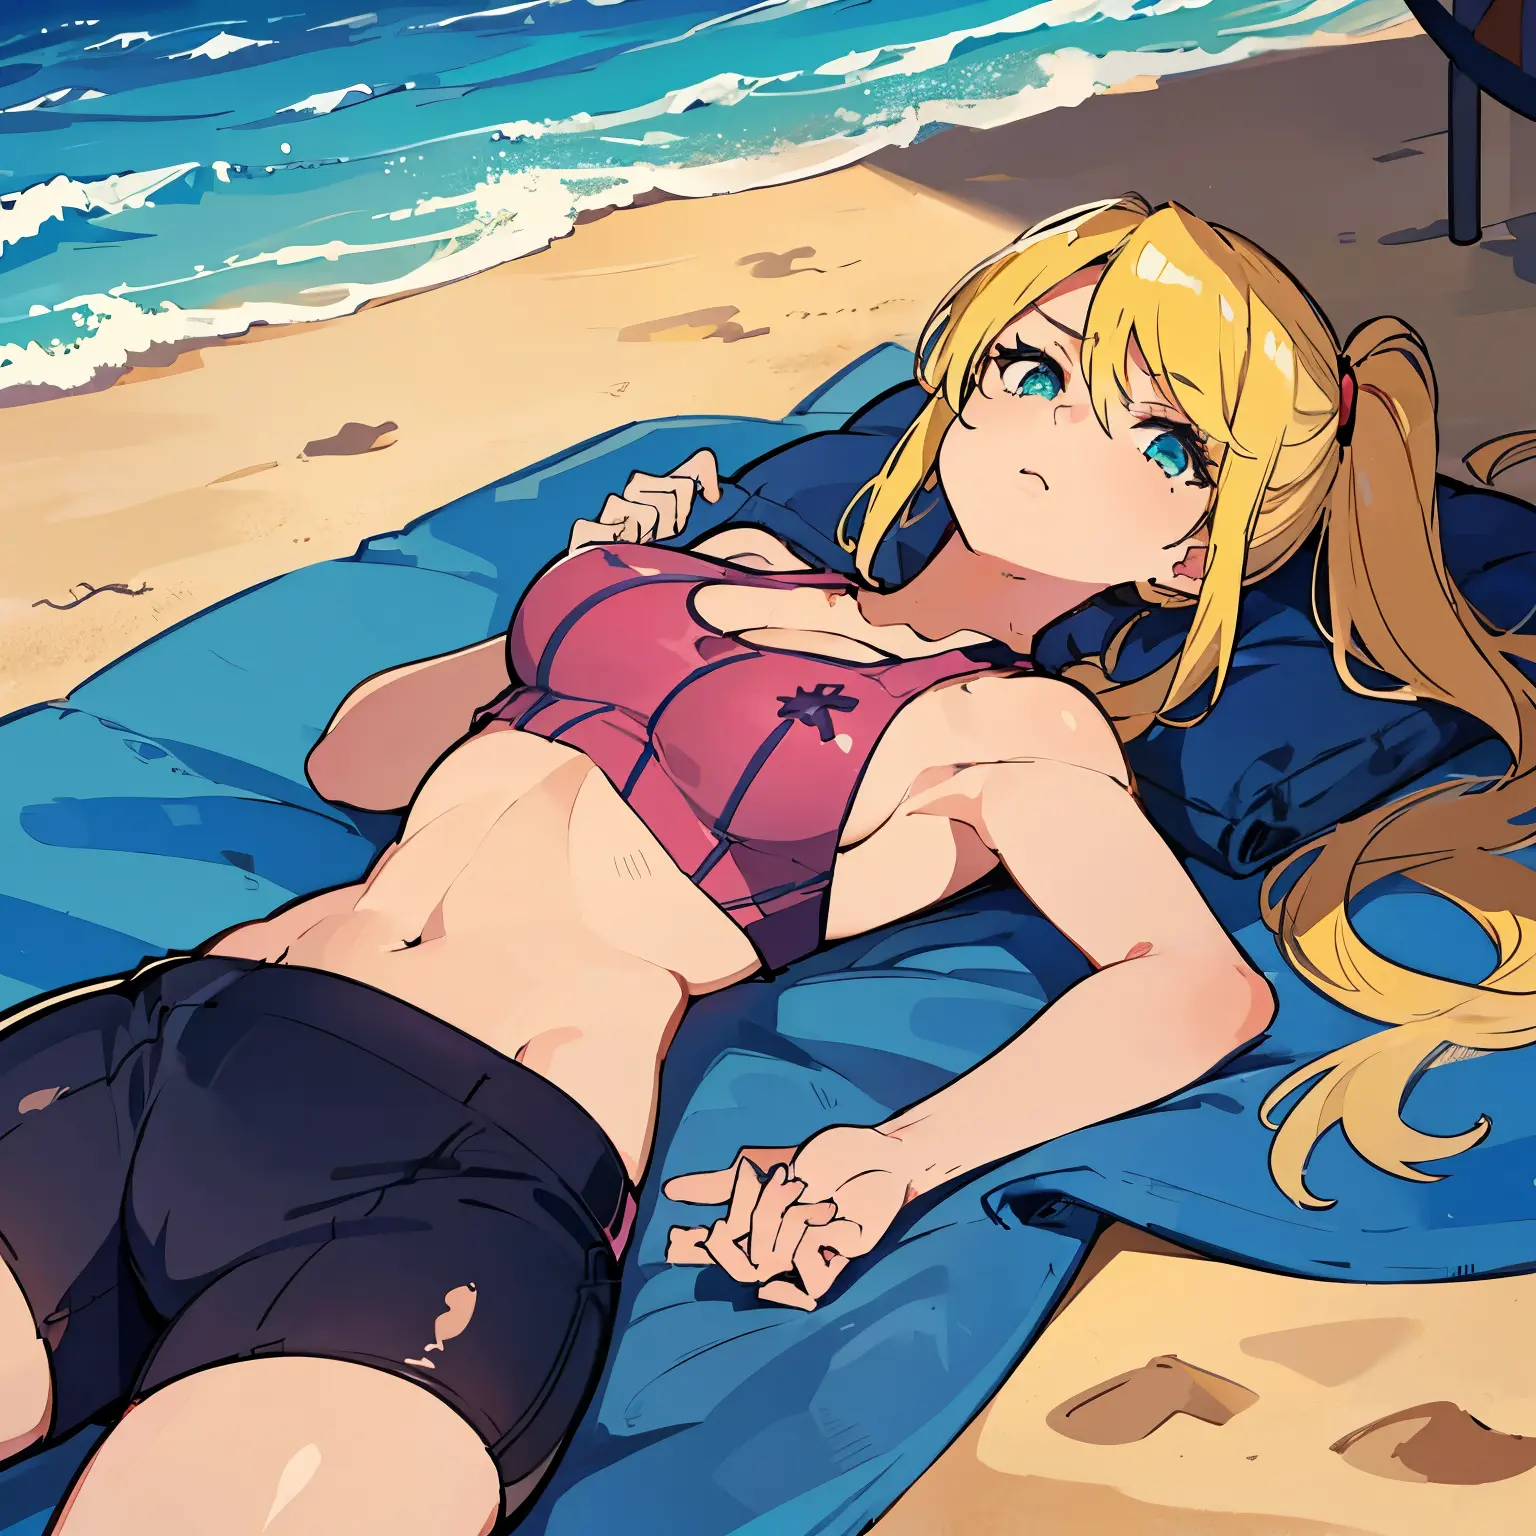 Samus aran,from behind, lying on stomach,beach towel,ocean in the background,aroused girl,1girl,